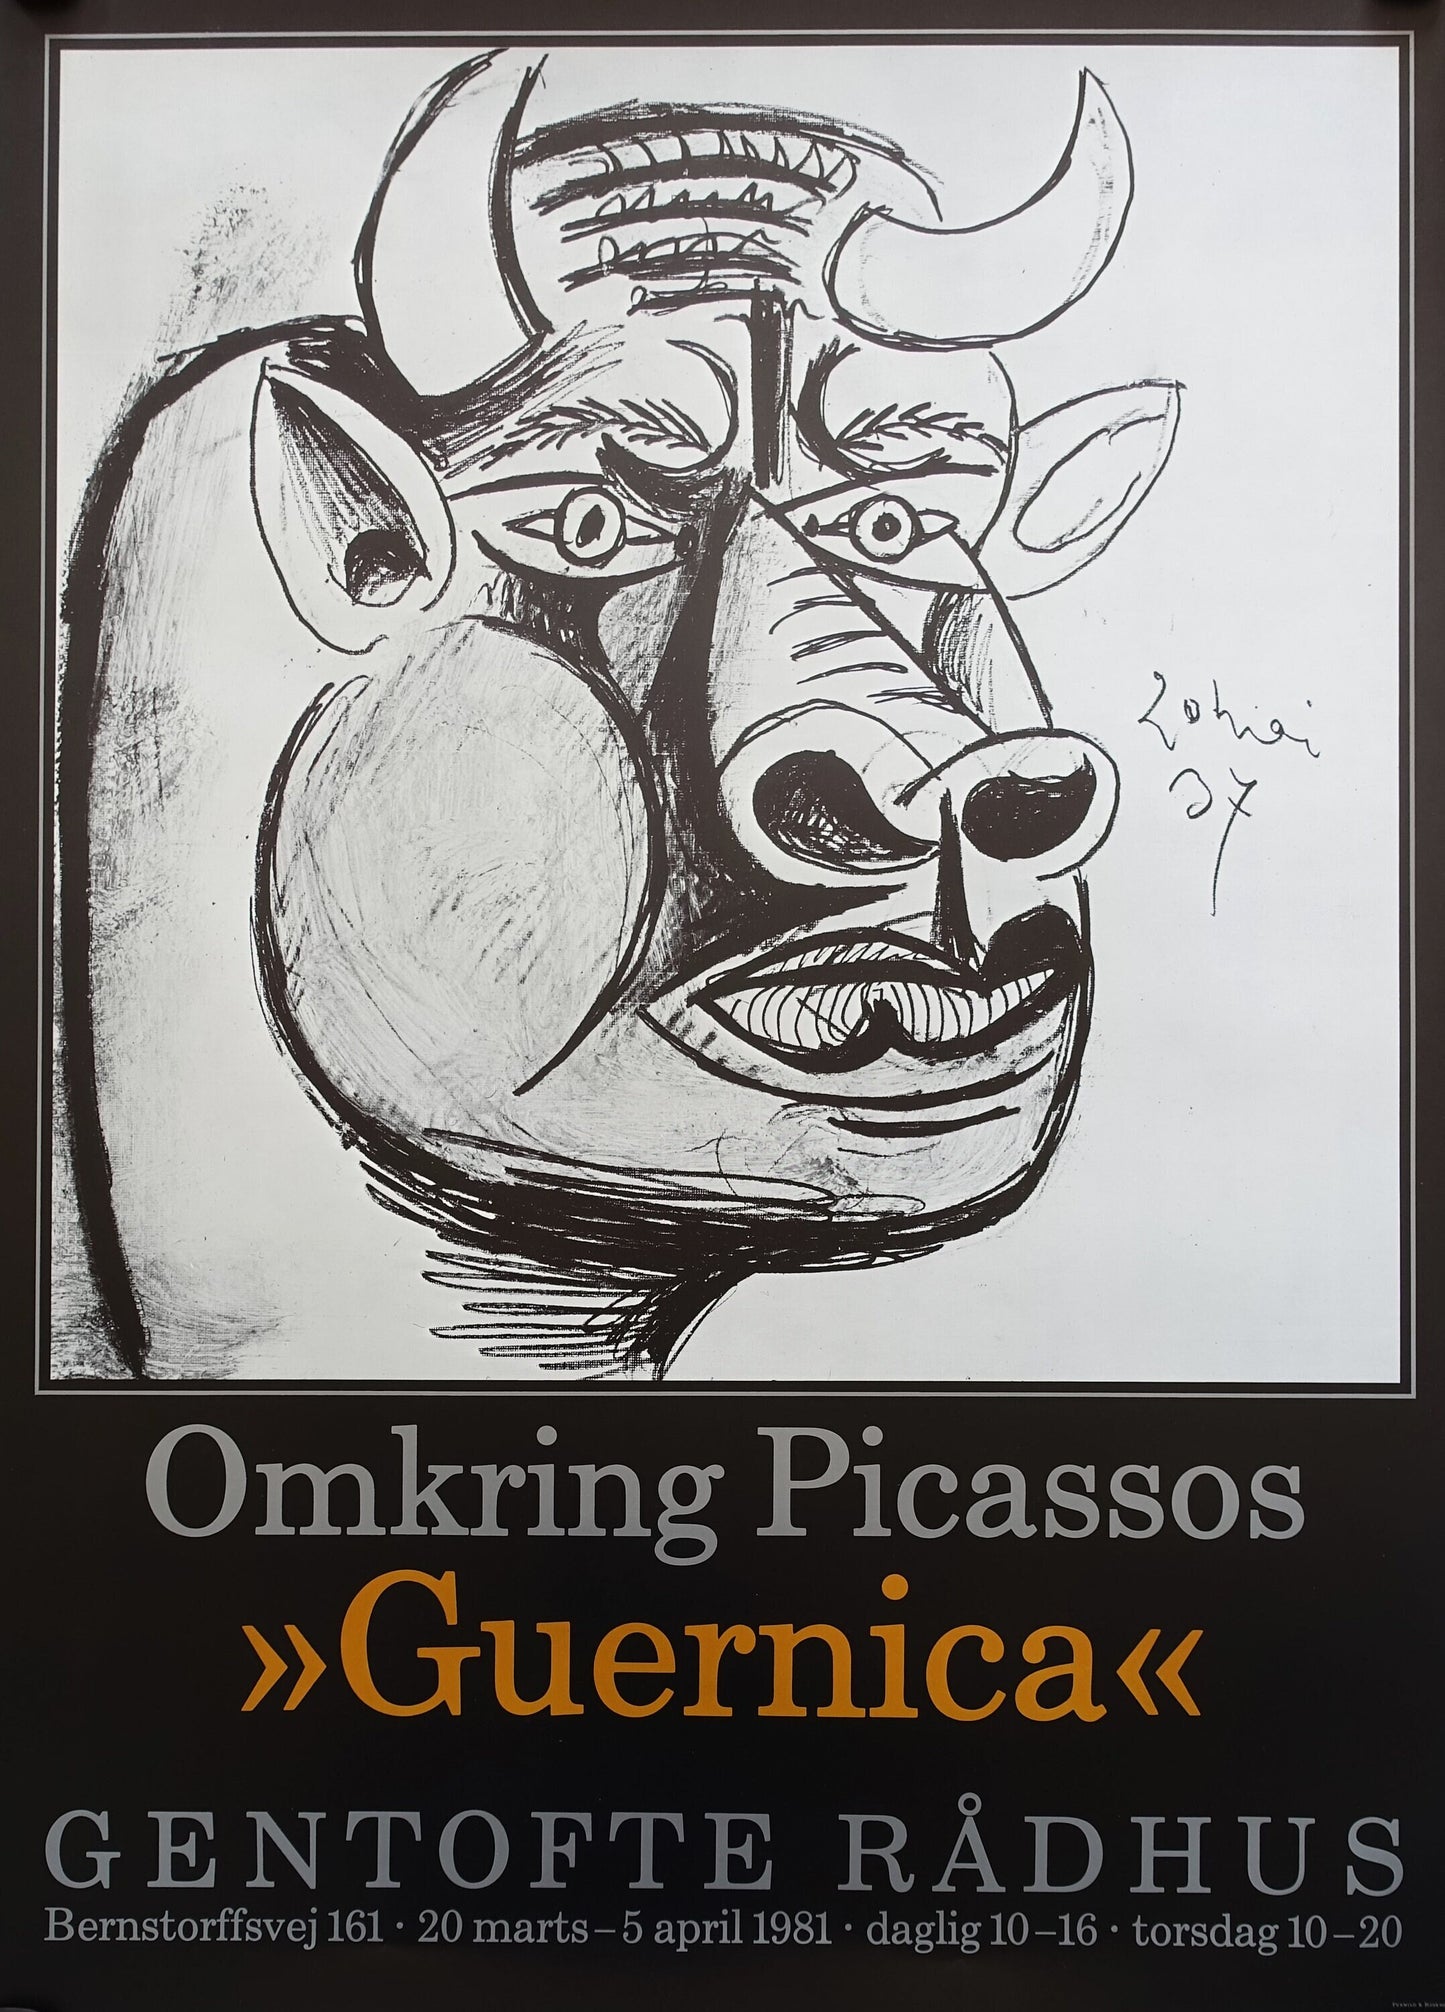 1981 Picasso Guernica Exhibition Poster - Original Vintage Poster